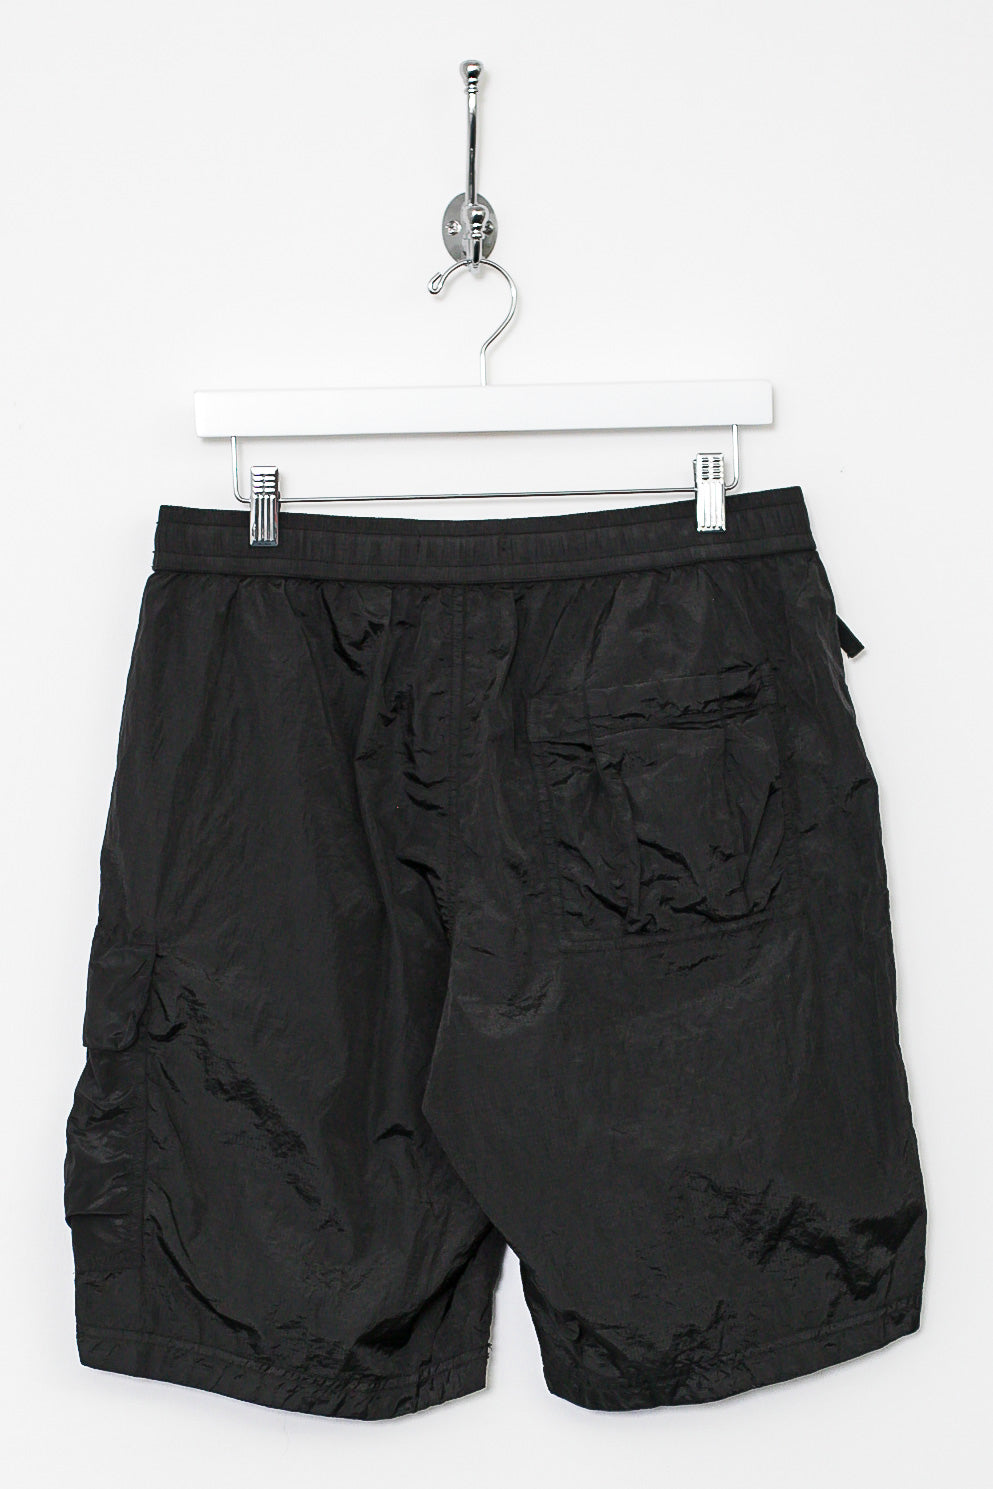 Stone Island Nylon Shorts (M)